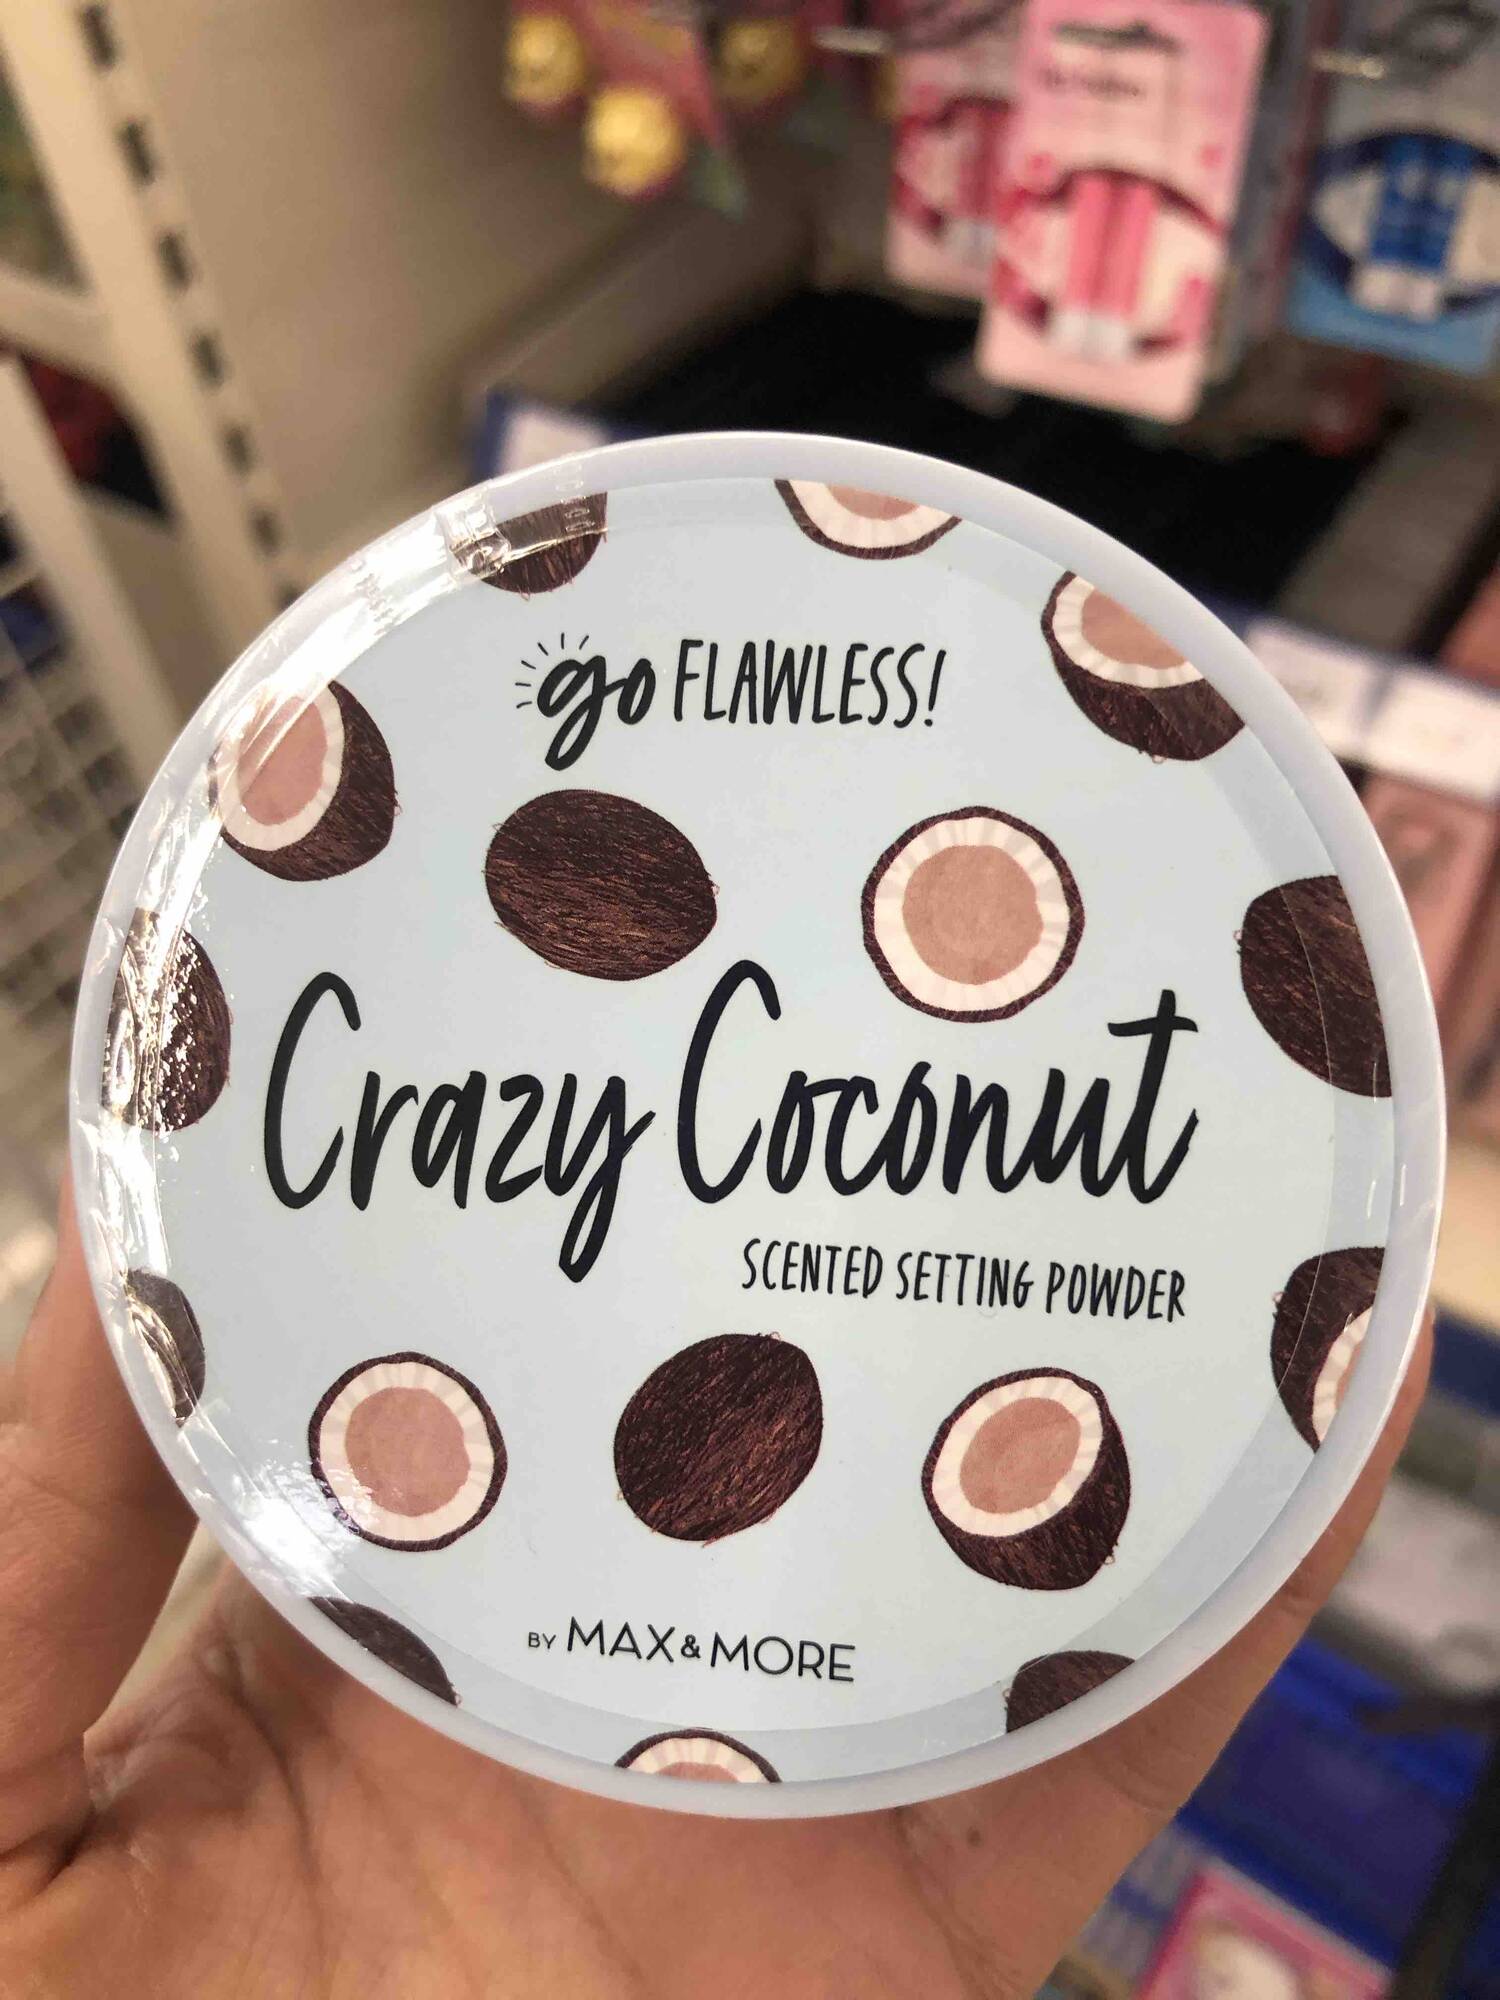 MAX & MORE - Crazy coconut - Scented setting powder